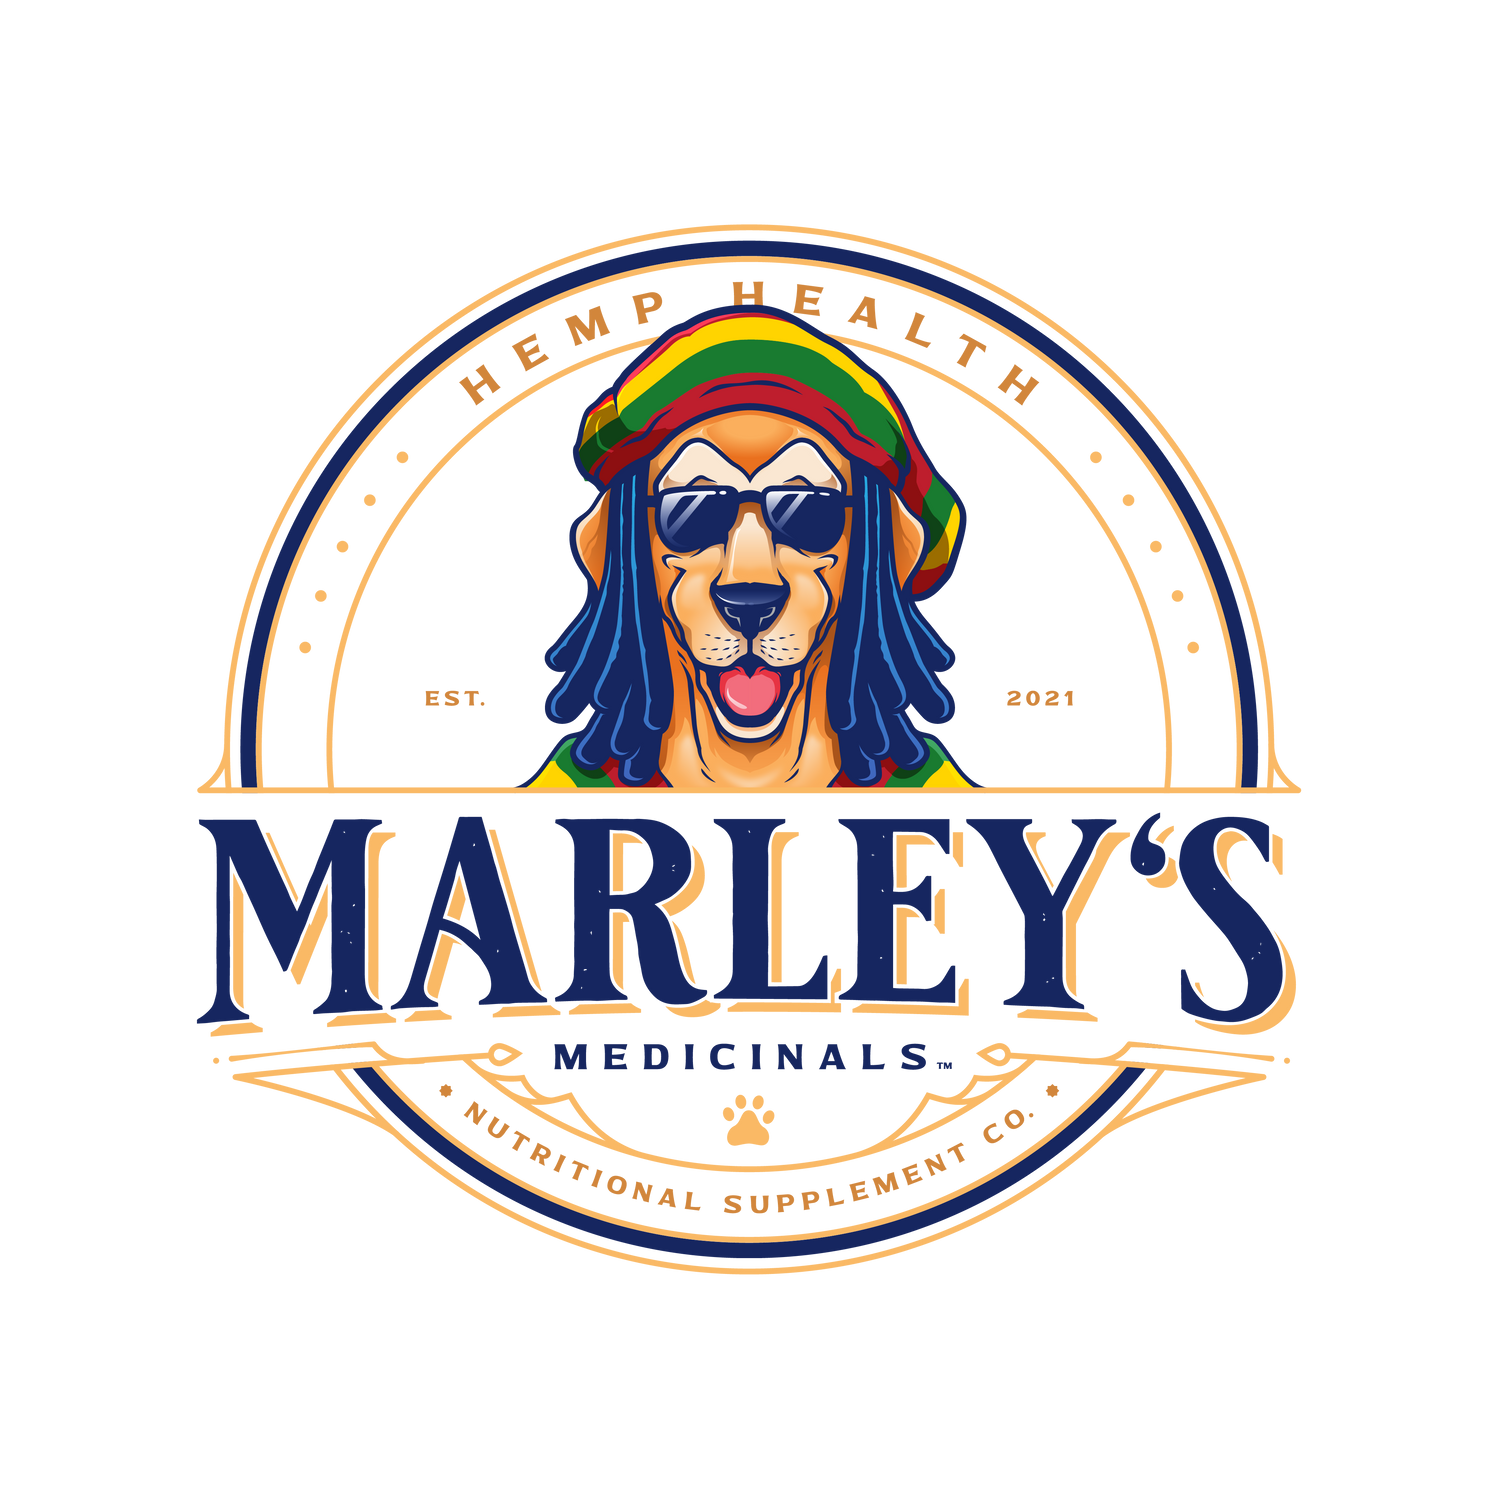 Marley's Medicinals (DOGS)